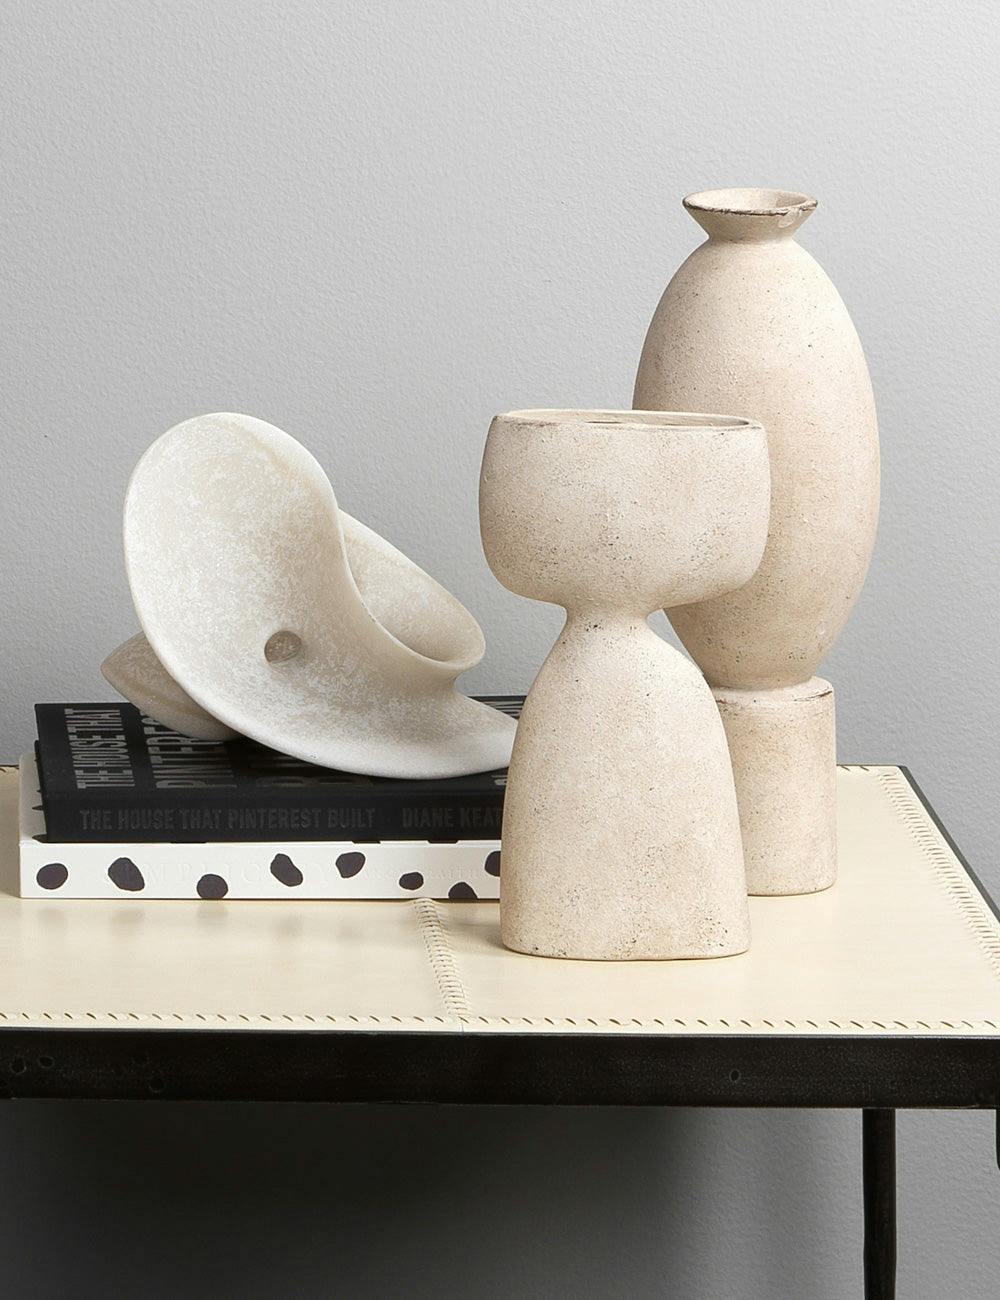 Handcrafted Coastal Ceramic Table Vase with Narrow Waist